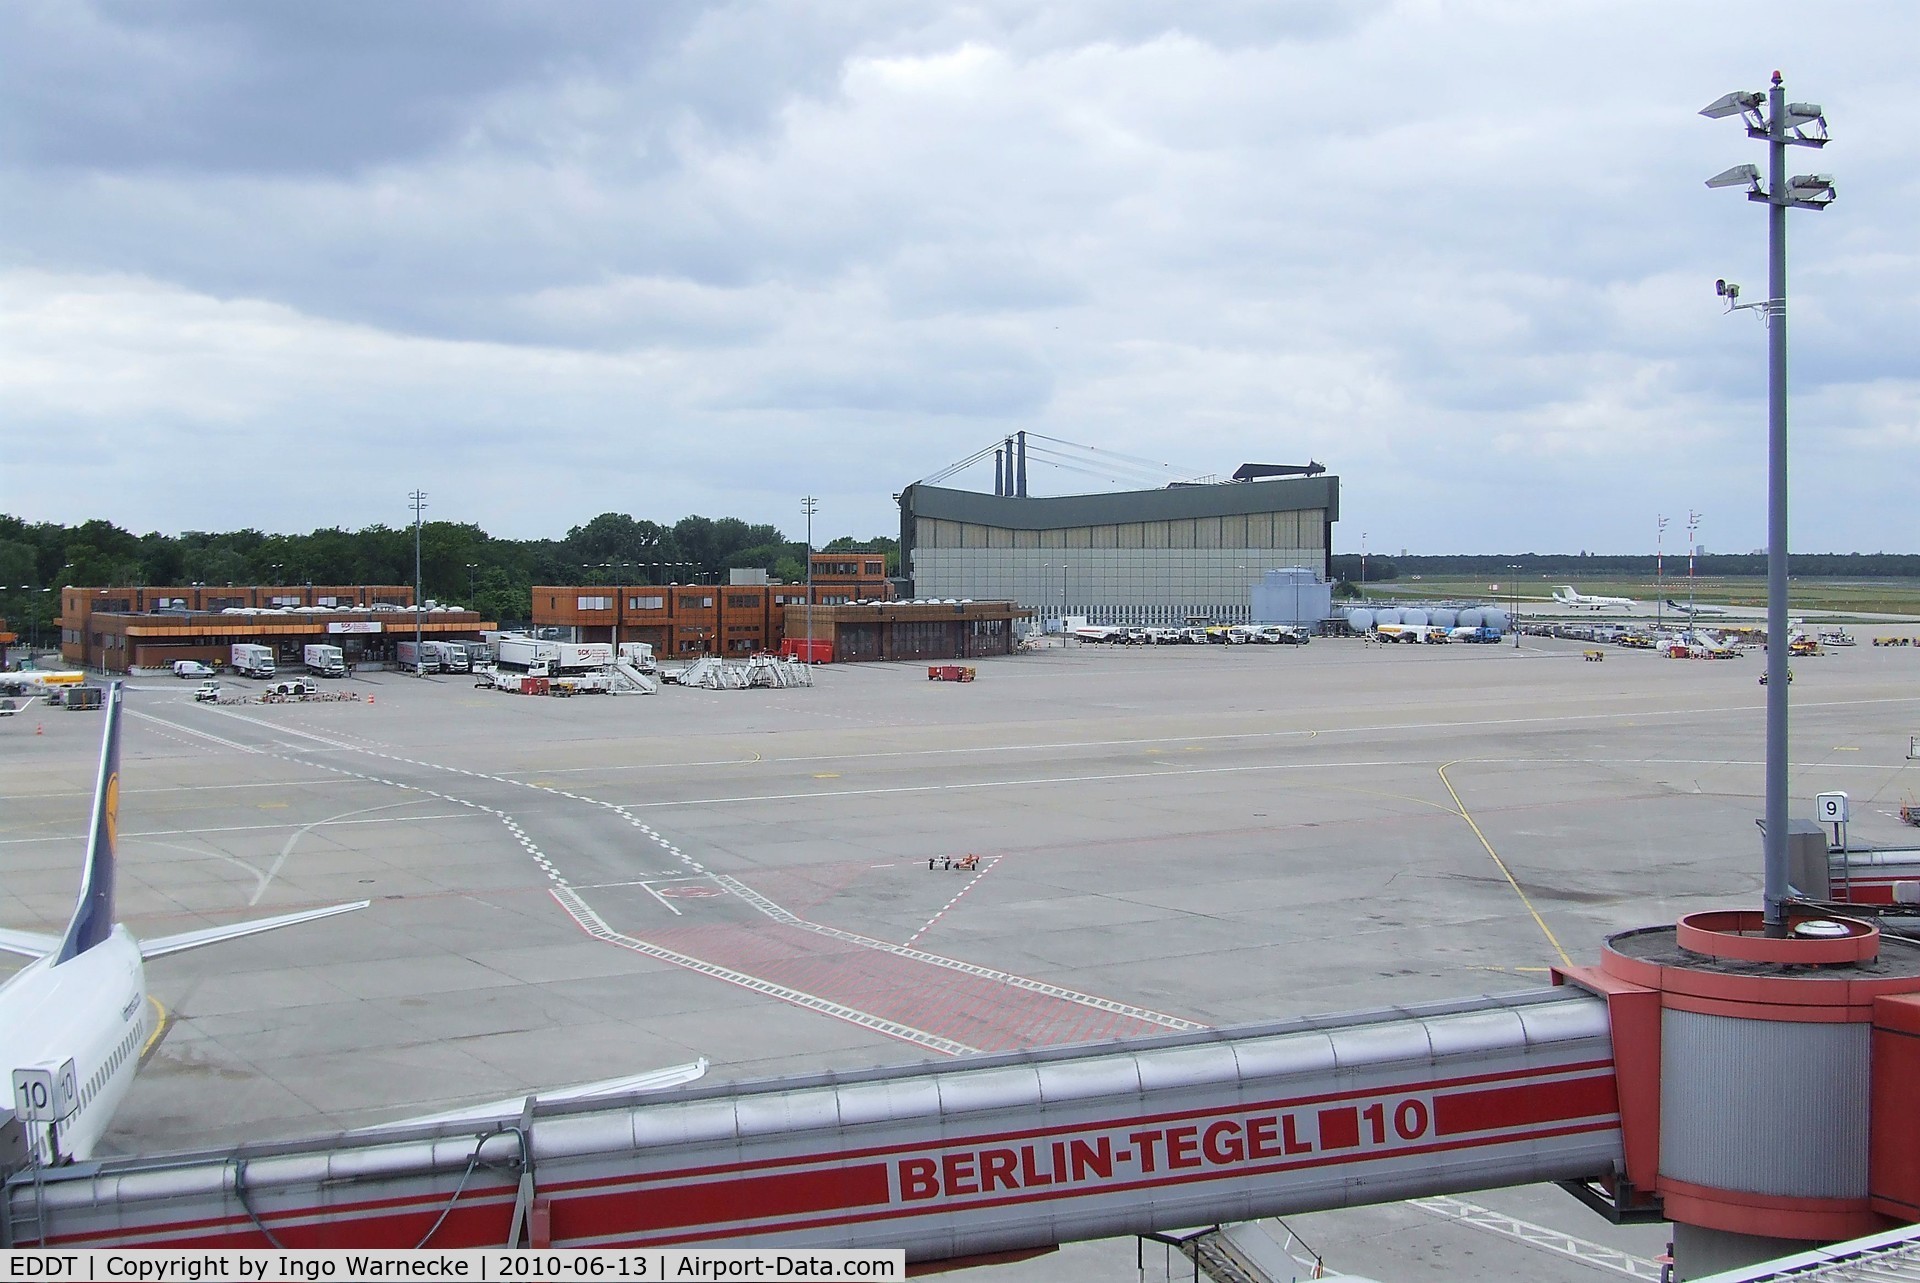 Tegel International Airport (closing in 2011), Berlin Germany (EDDT) - apron at Berlin Tegel airport